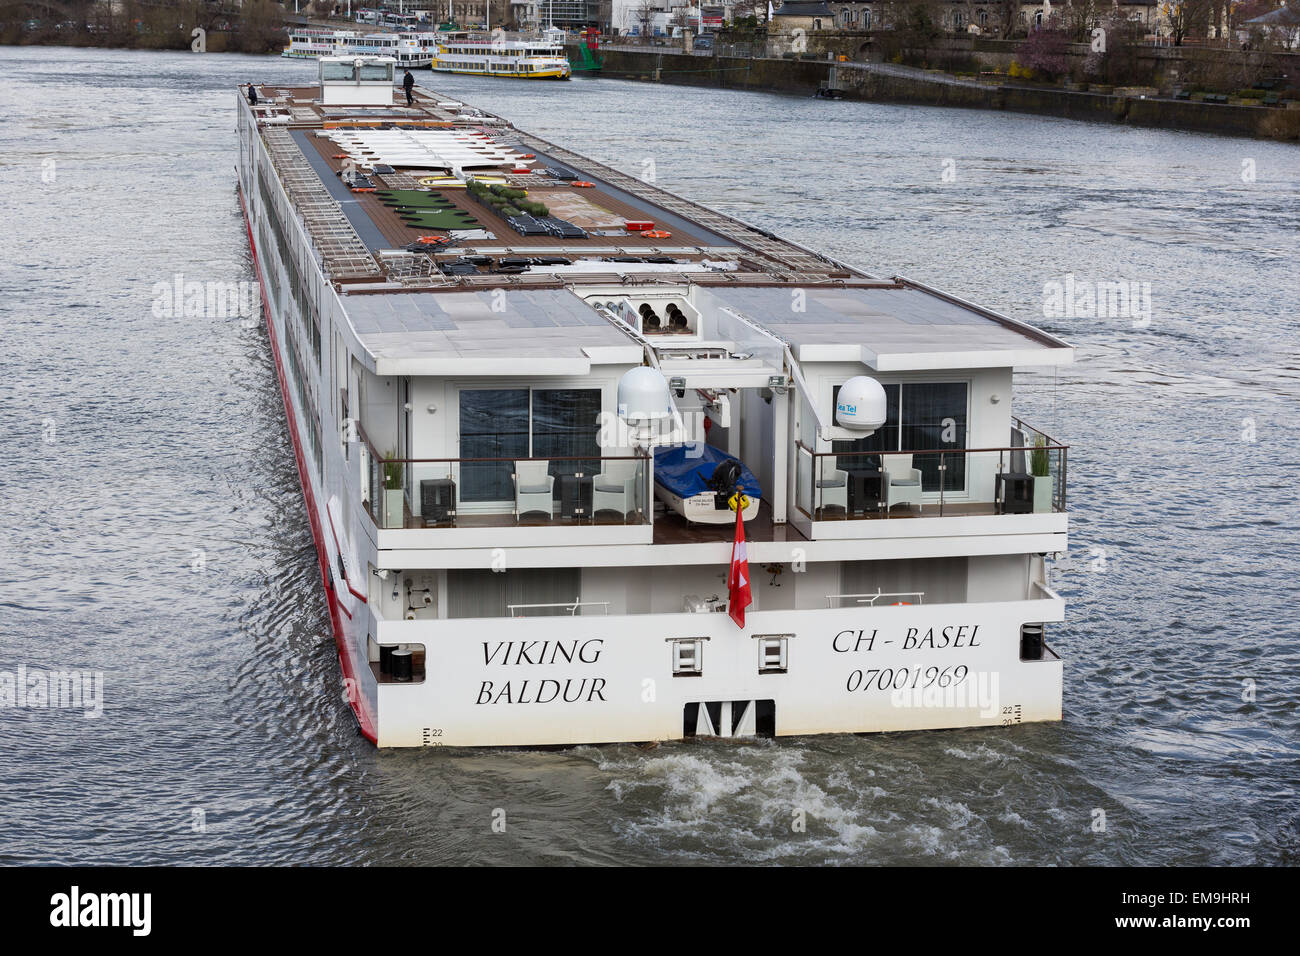 The cruise boat Viking Baldur - Viking River Cruises - on the river Main at Würzberg, Bavaria, Germany Stock Photo